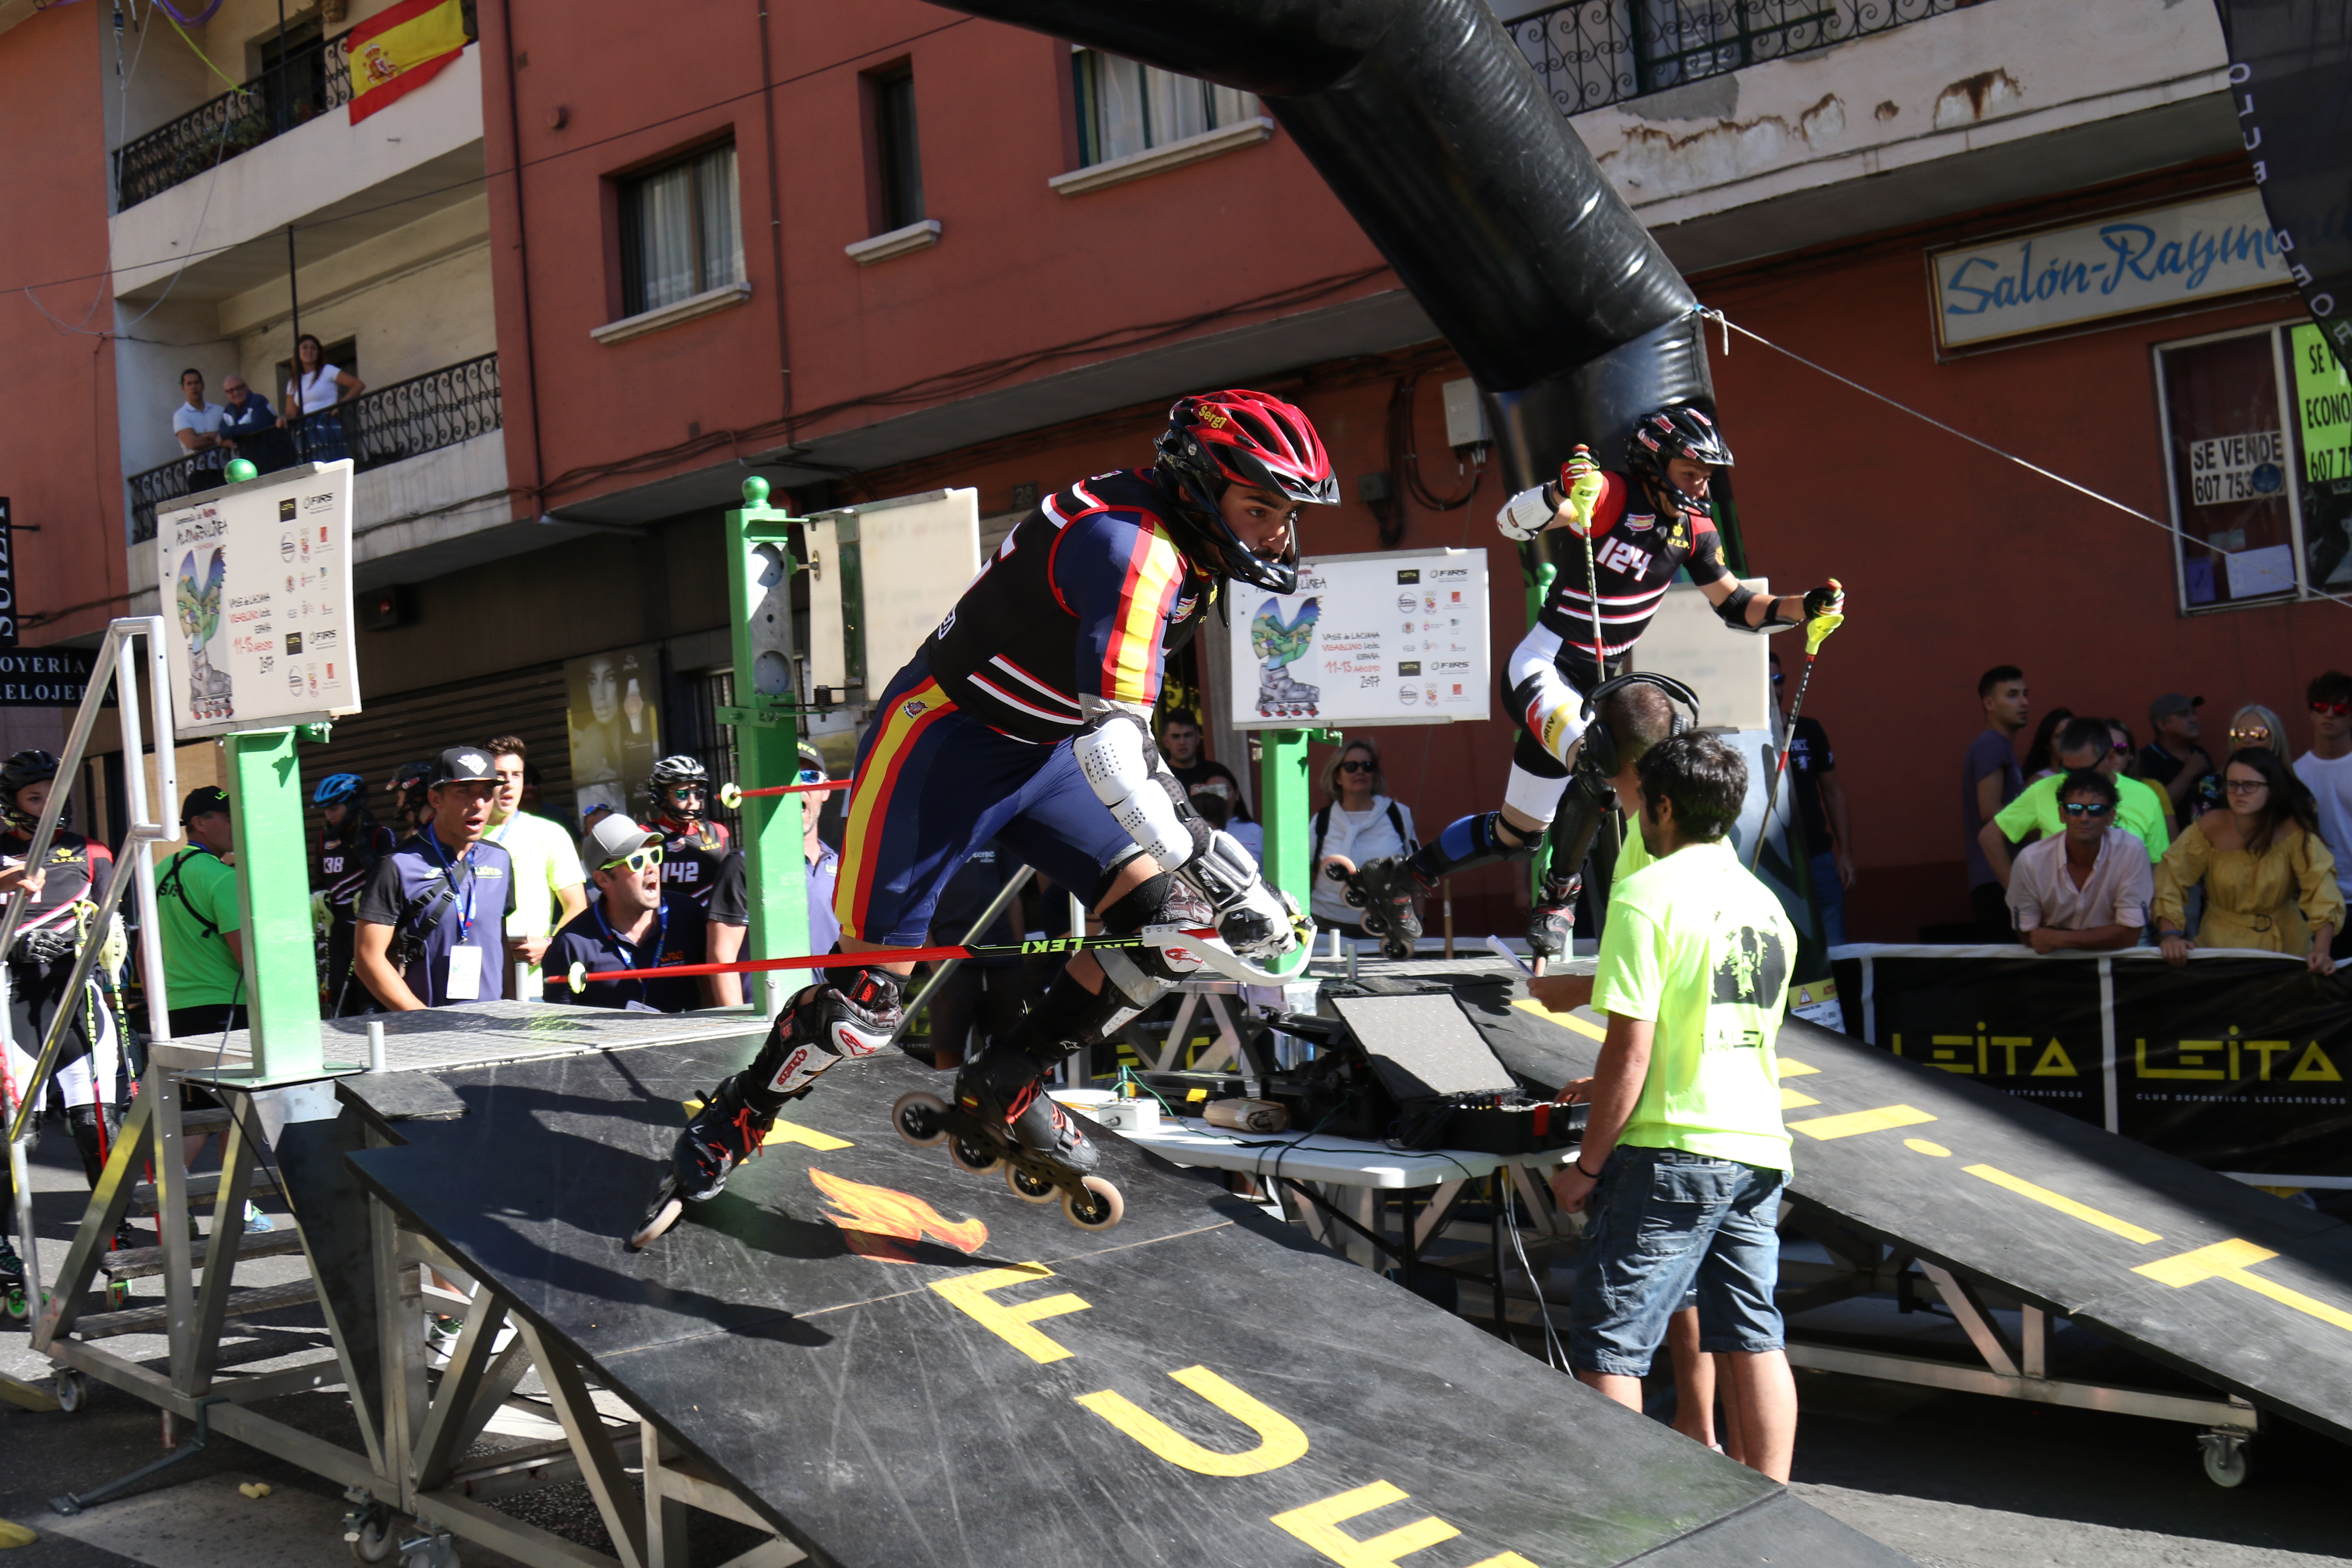 Campeonato de Europa de Alpino Paralelo en Línea disputado en Villablino (León)